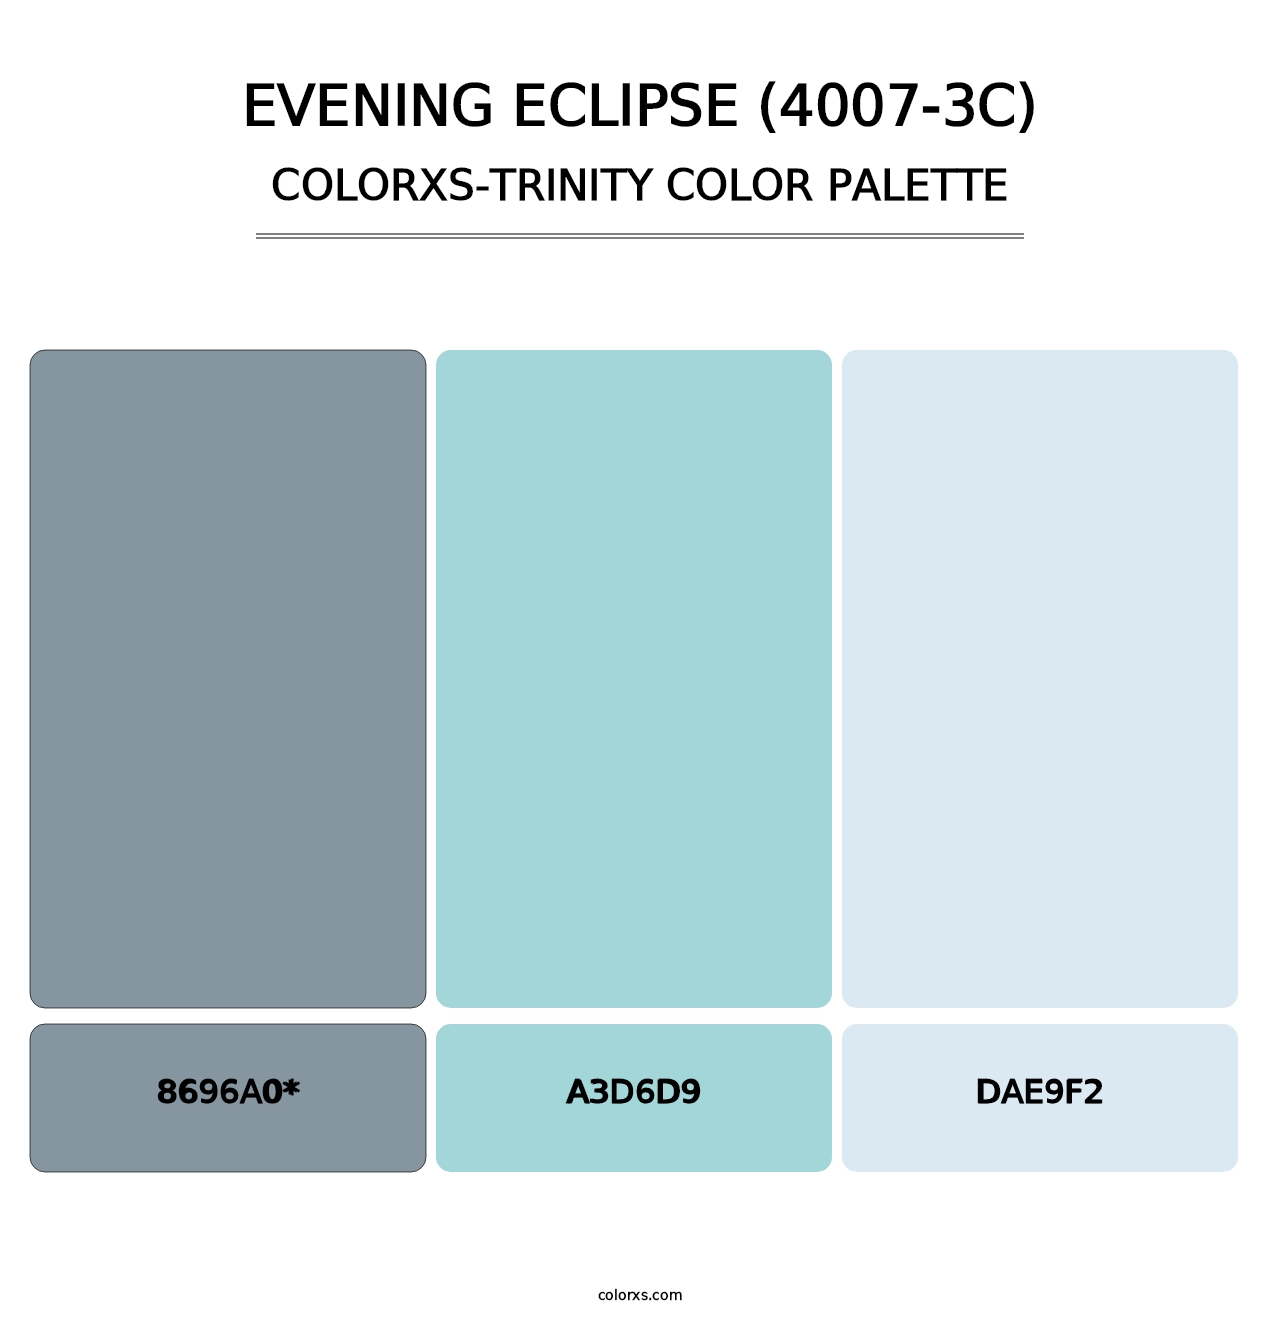 Evening Eclipse (4007-3C) - Colorxs Trinity Palette